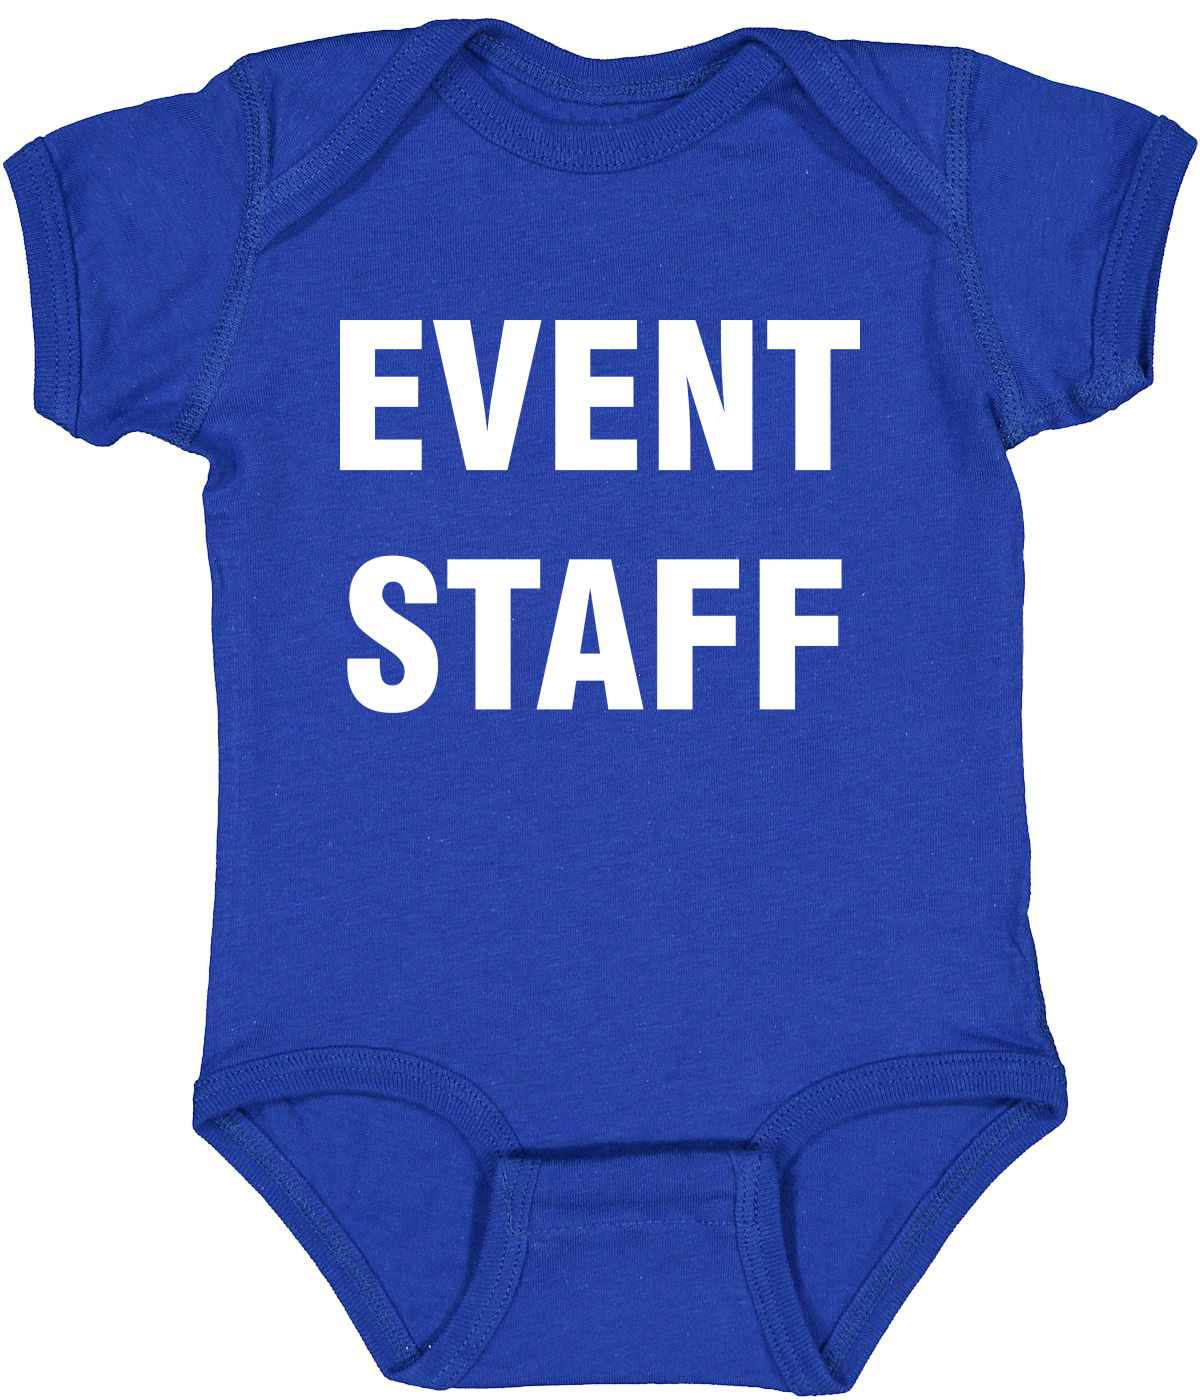 EVENT STAFF on Infant BodySuit (#399-10)